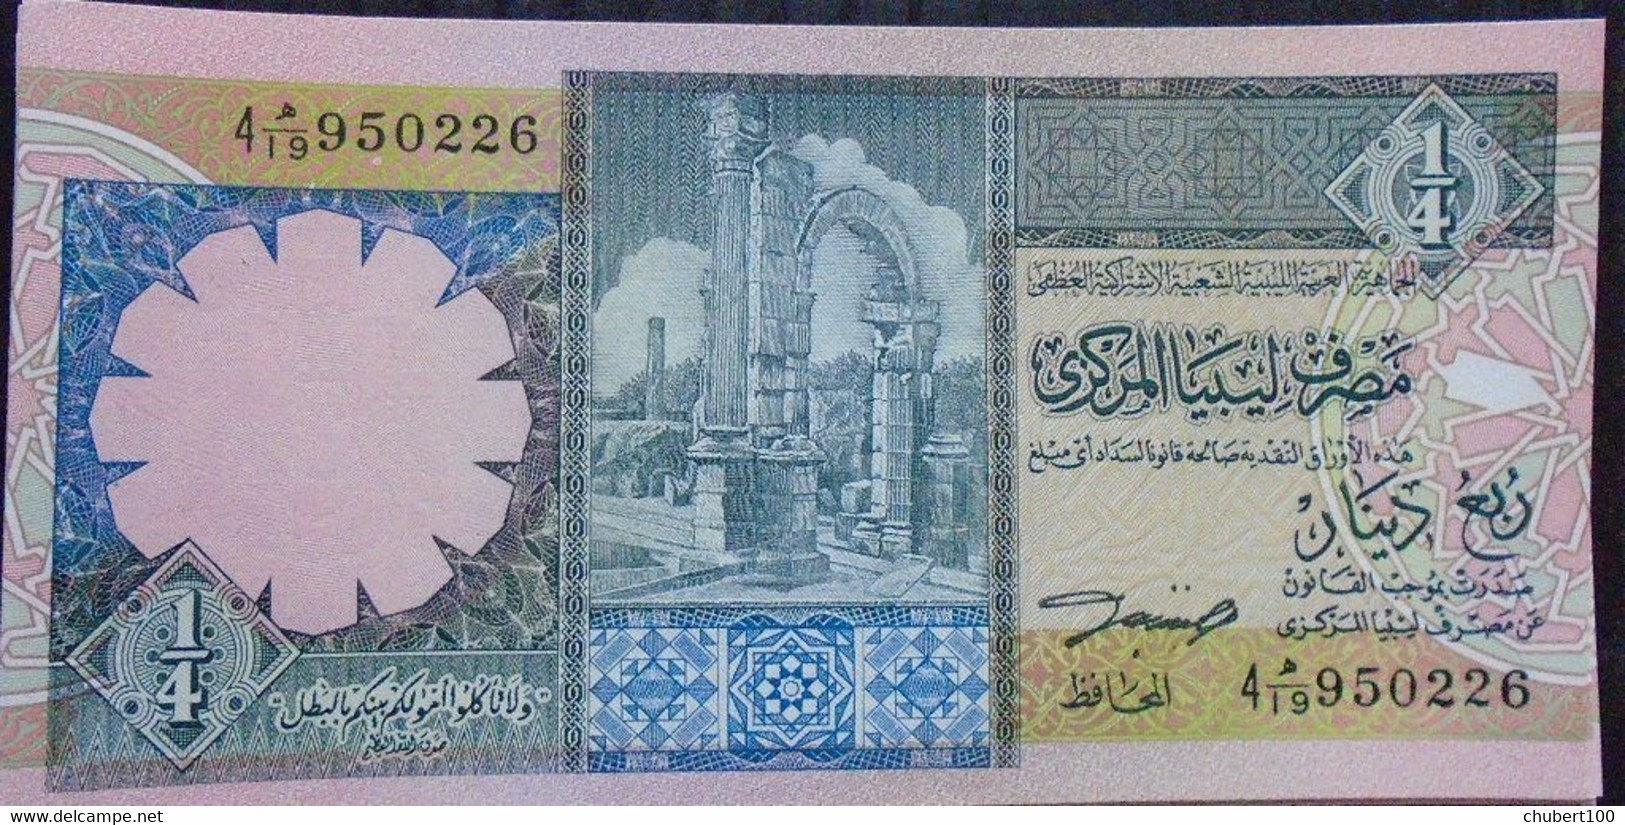 LIBYA , P 57b + 57c  ,  1/4 Dinar  ,  ND 1991 ,  UNC Neuf , 2 Notes - Libya